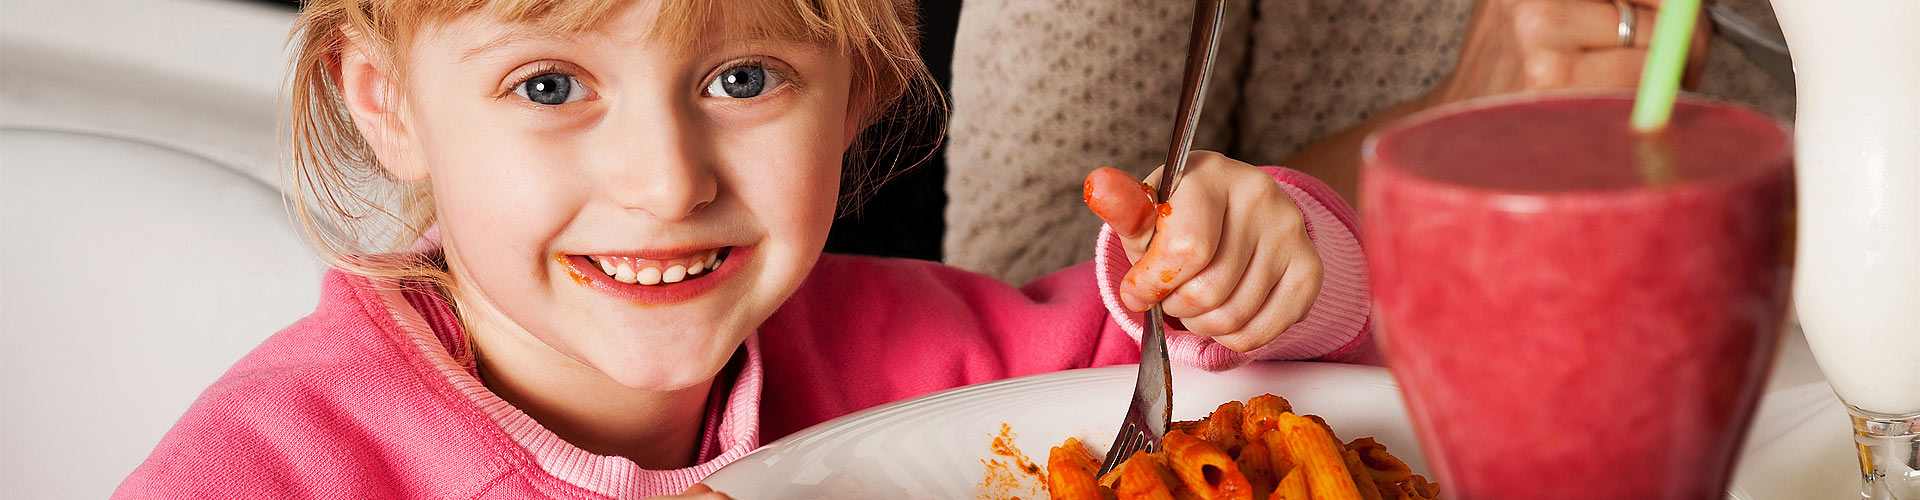 Restaurantes baratos para ir con niños en Cabañas de Virtus